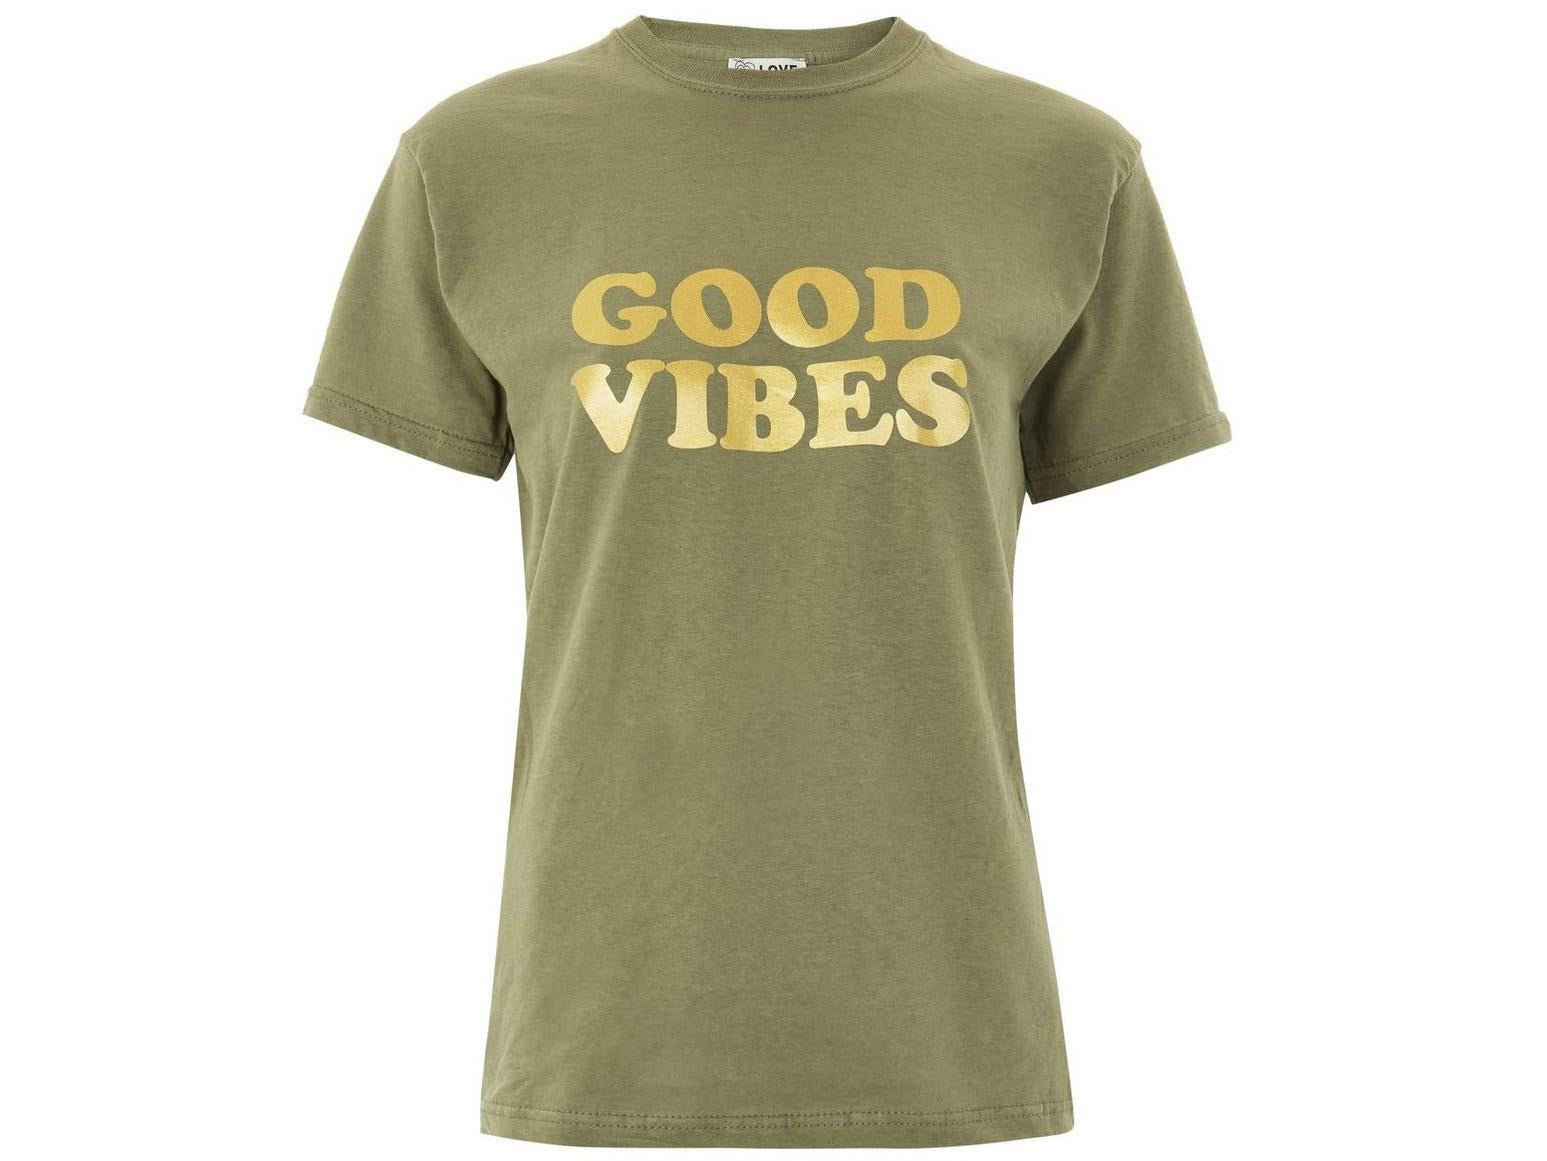 Good Vibes Slogan T-Shirt by Love, £16.99, Topshop